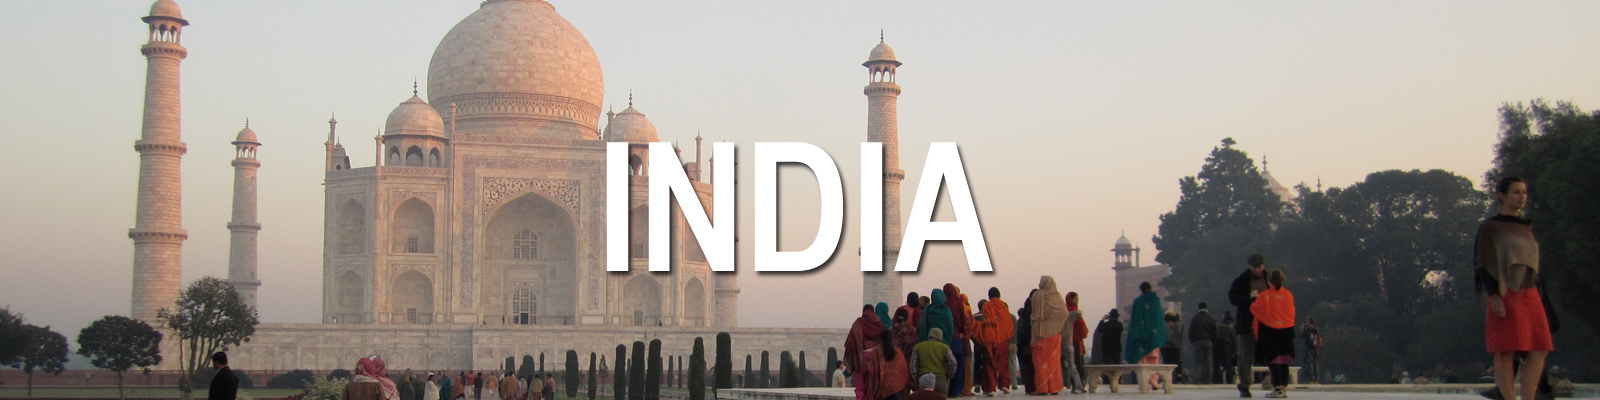 India Travel